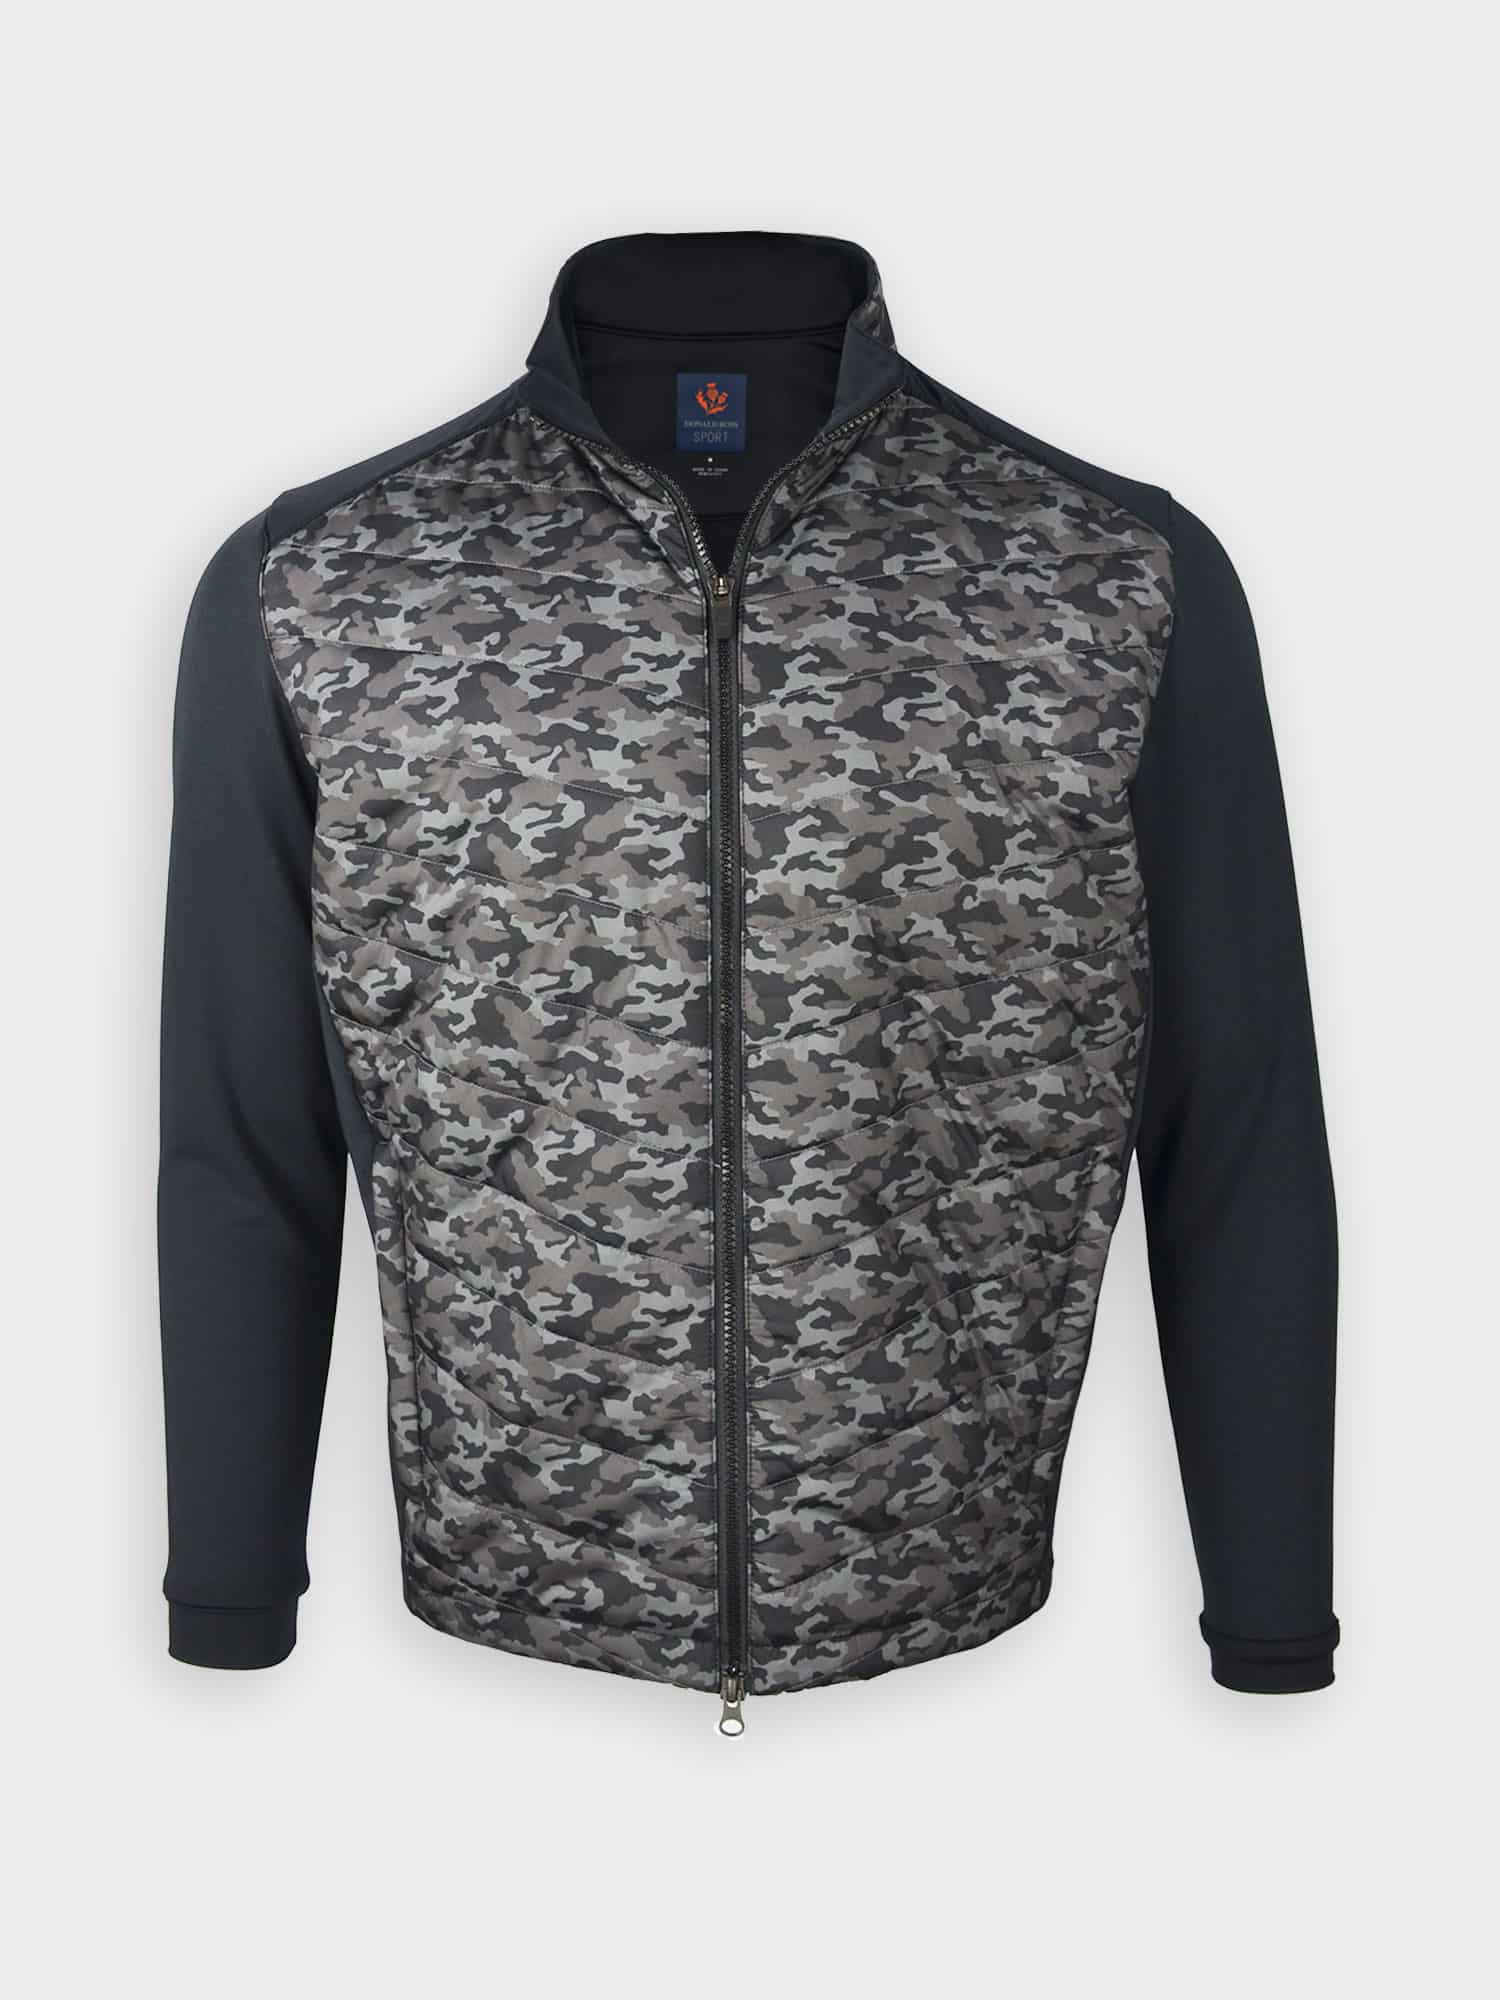 Blaine Mixed Media Golf Jacket - Sport - Donald Ross Sportswear